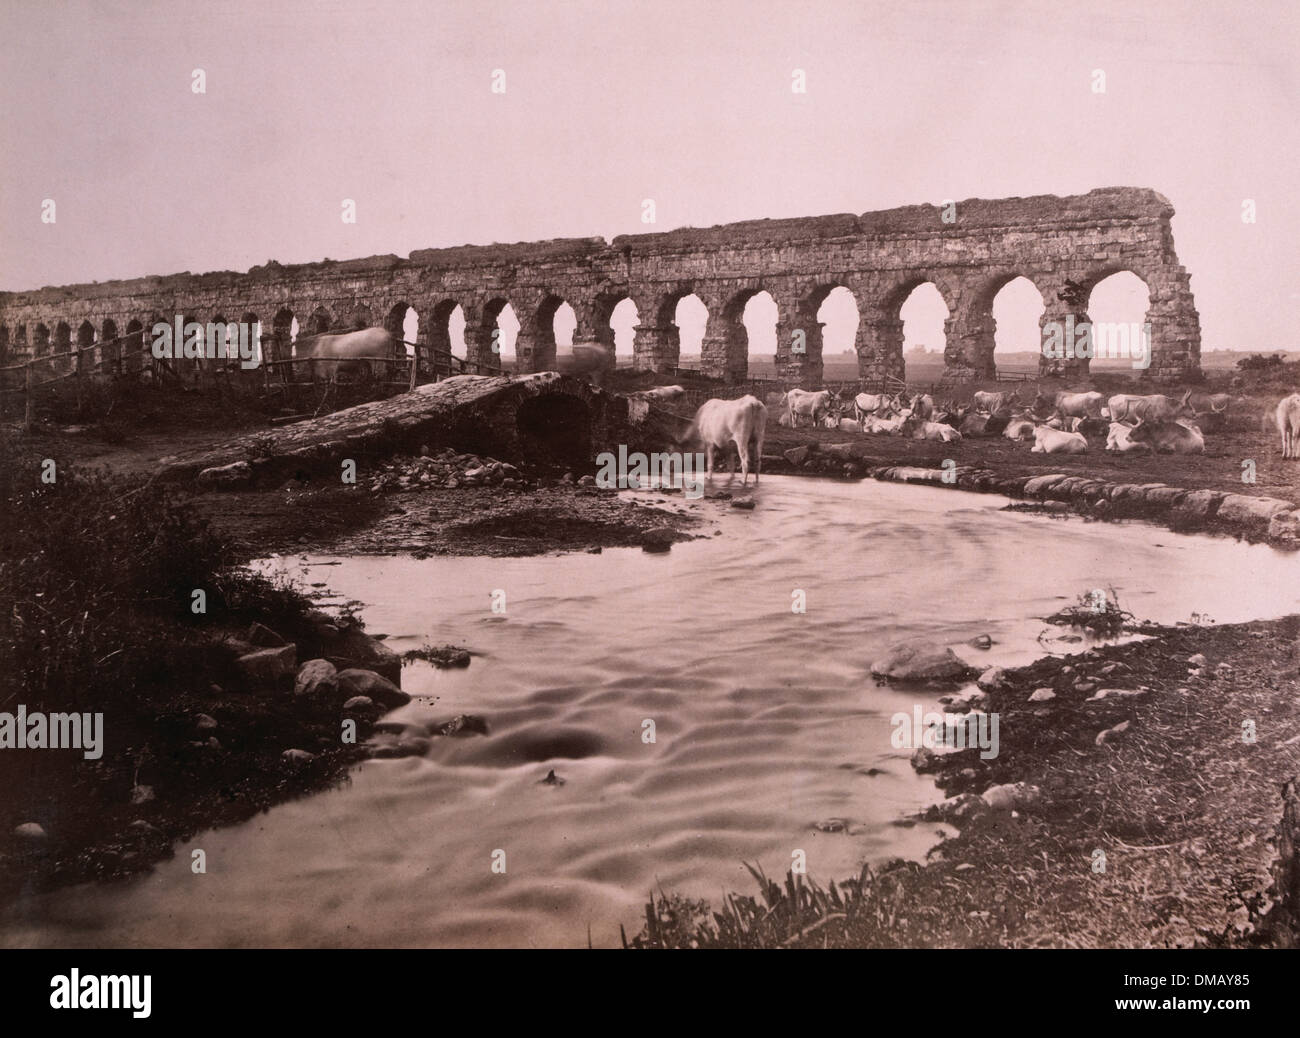 Roman Aqueduct and Cattle, Circa 1880 Stock Photo